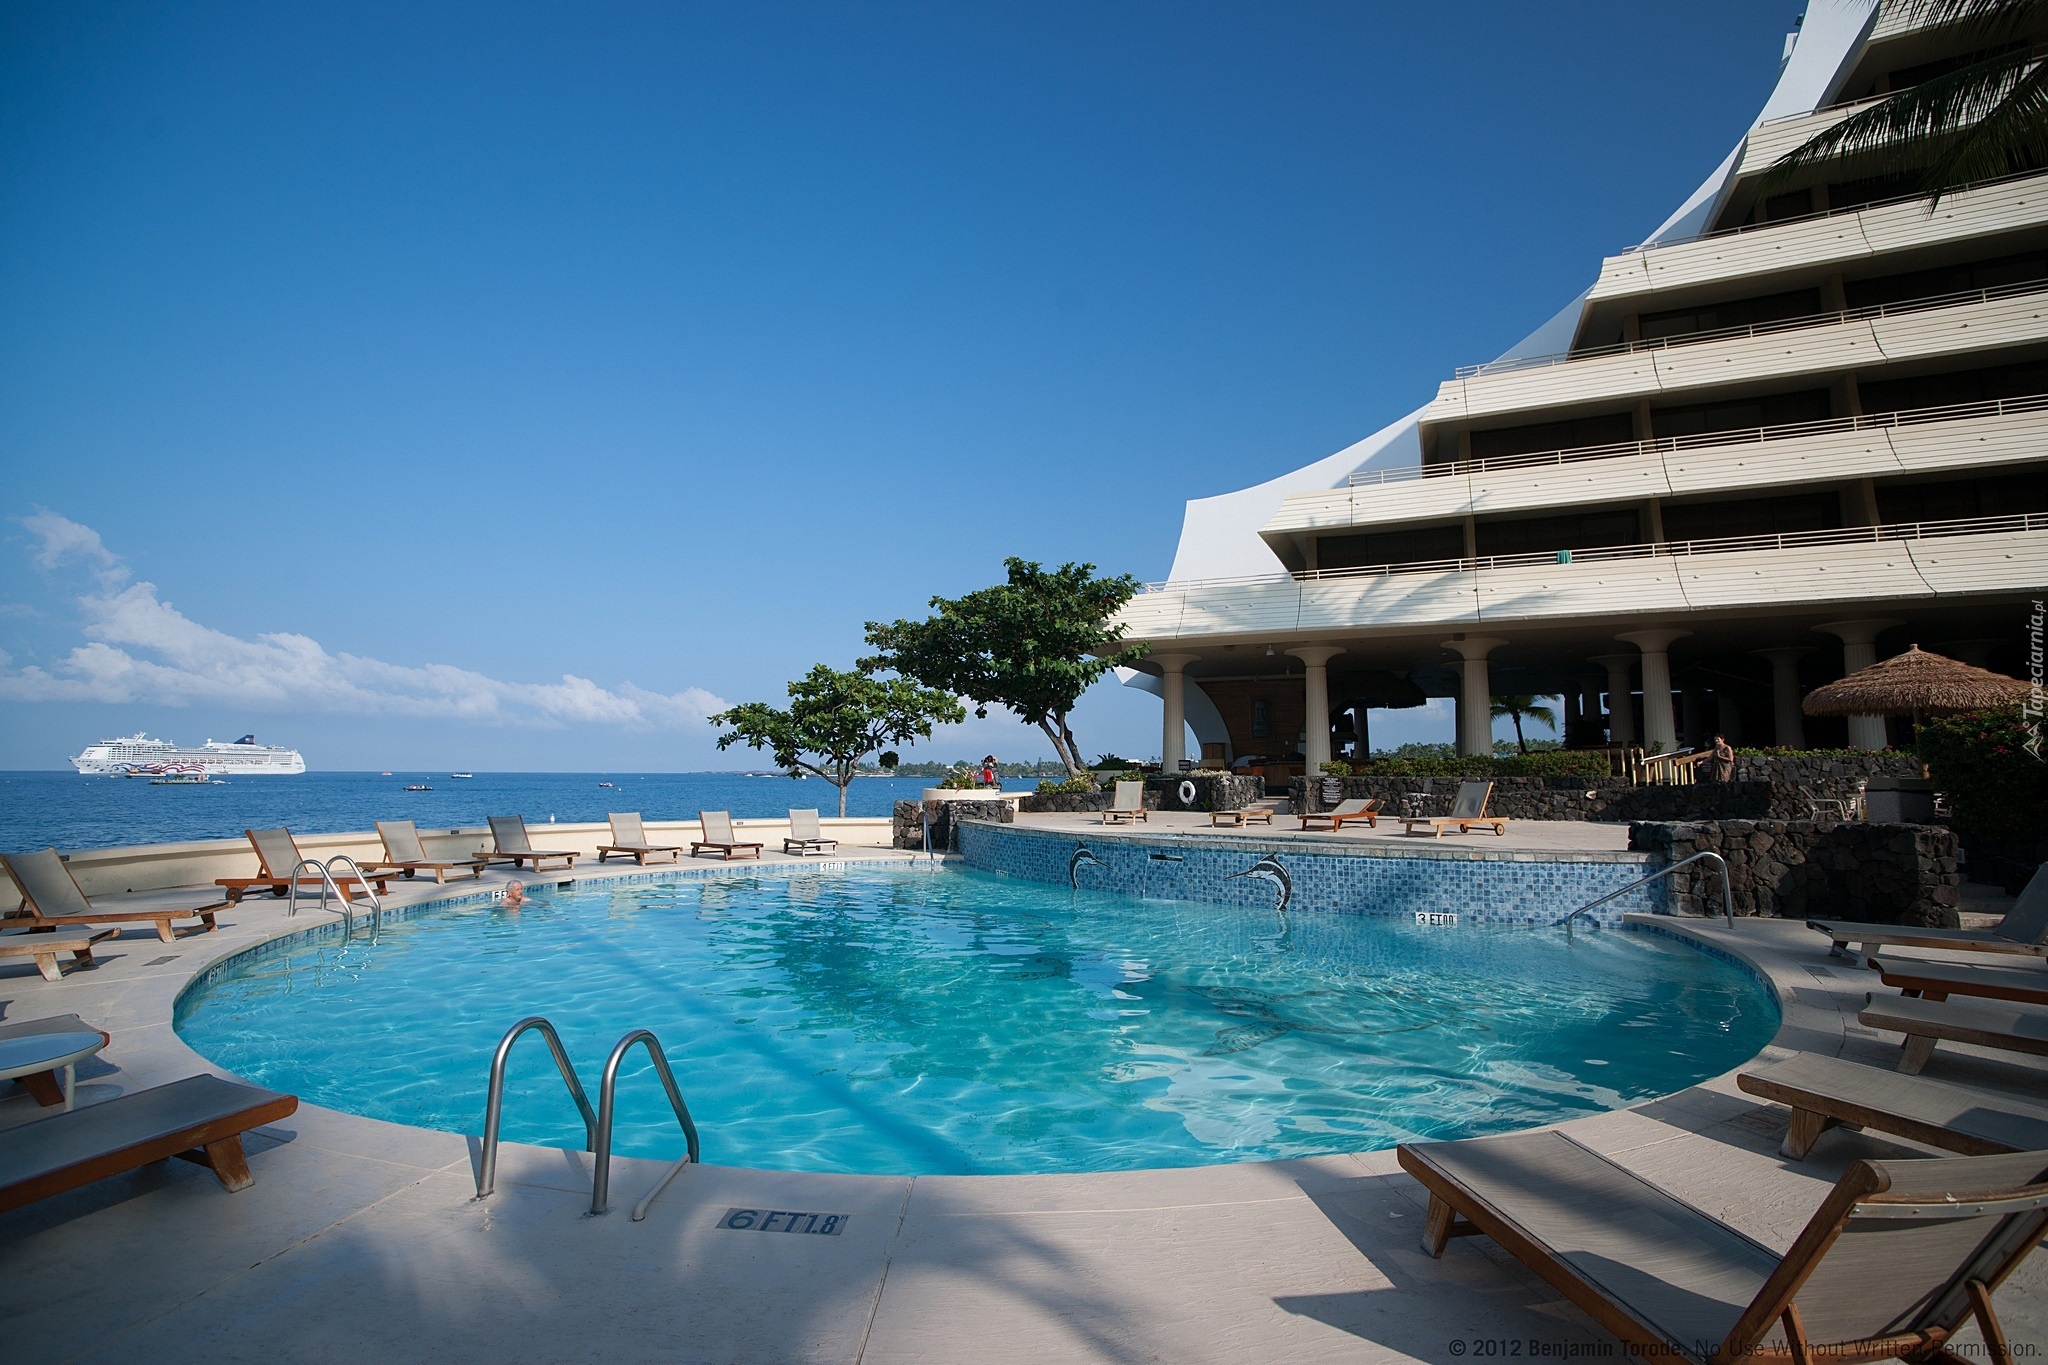 Hotel, Basen, Ocean, Hawaje